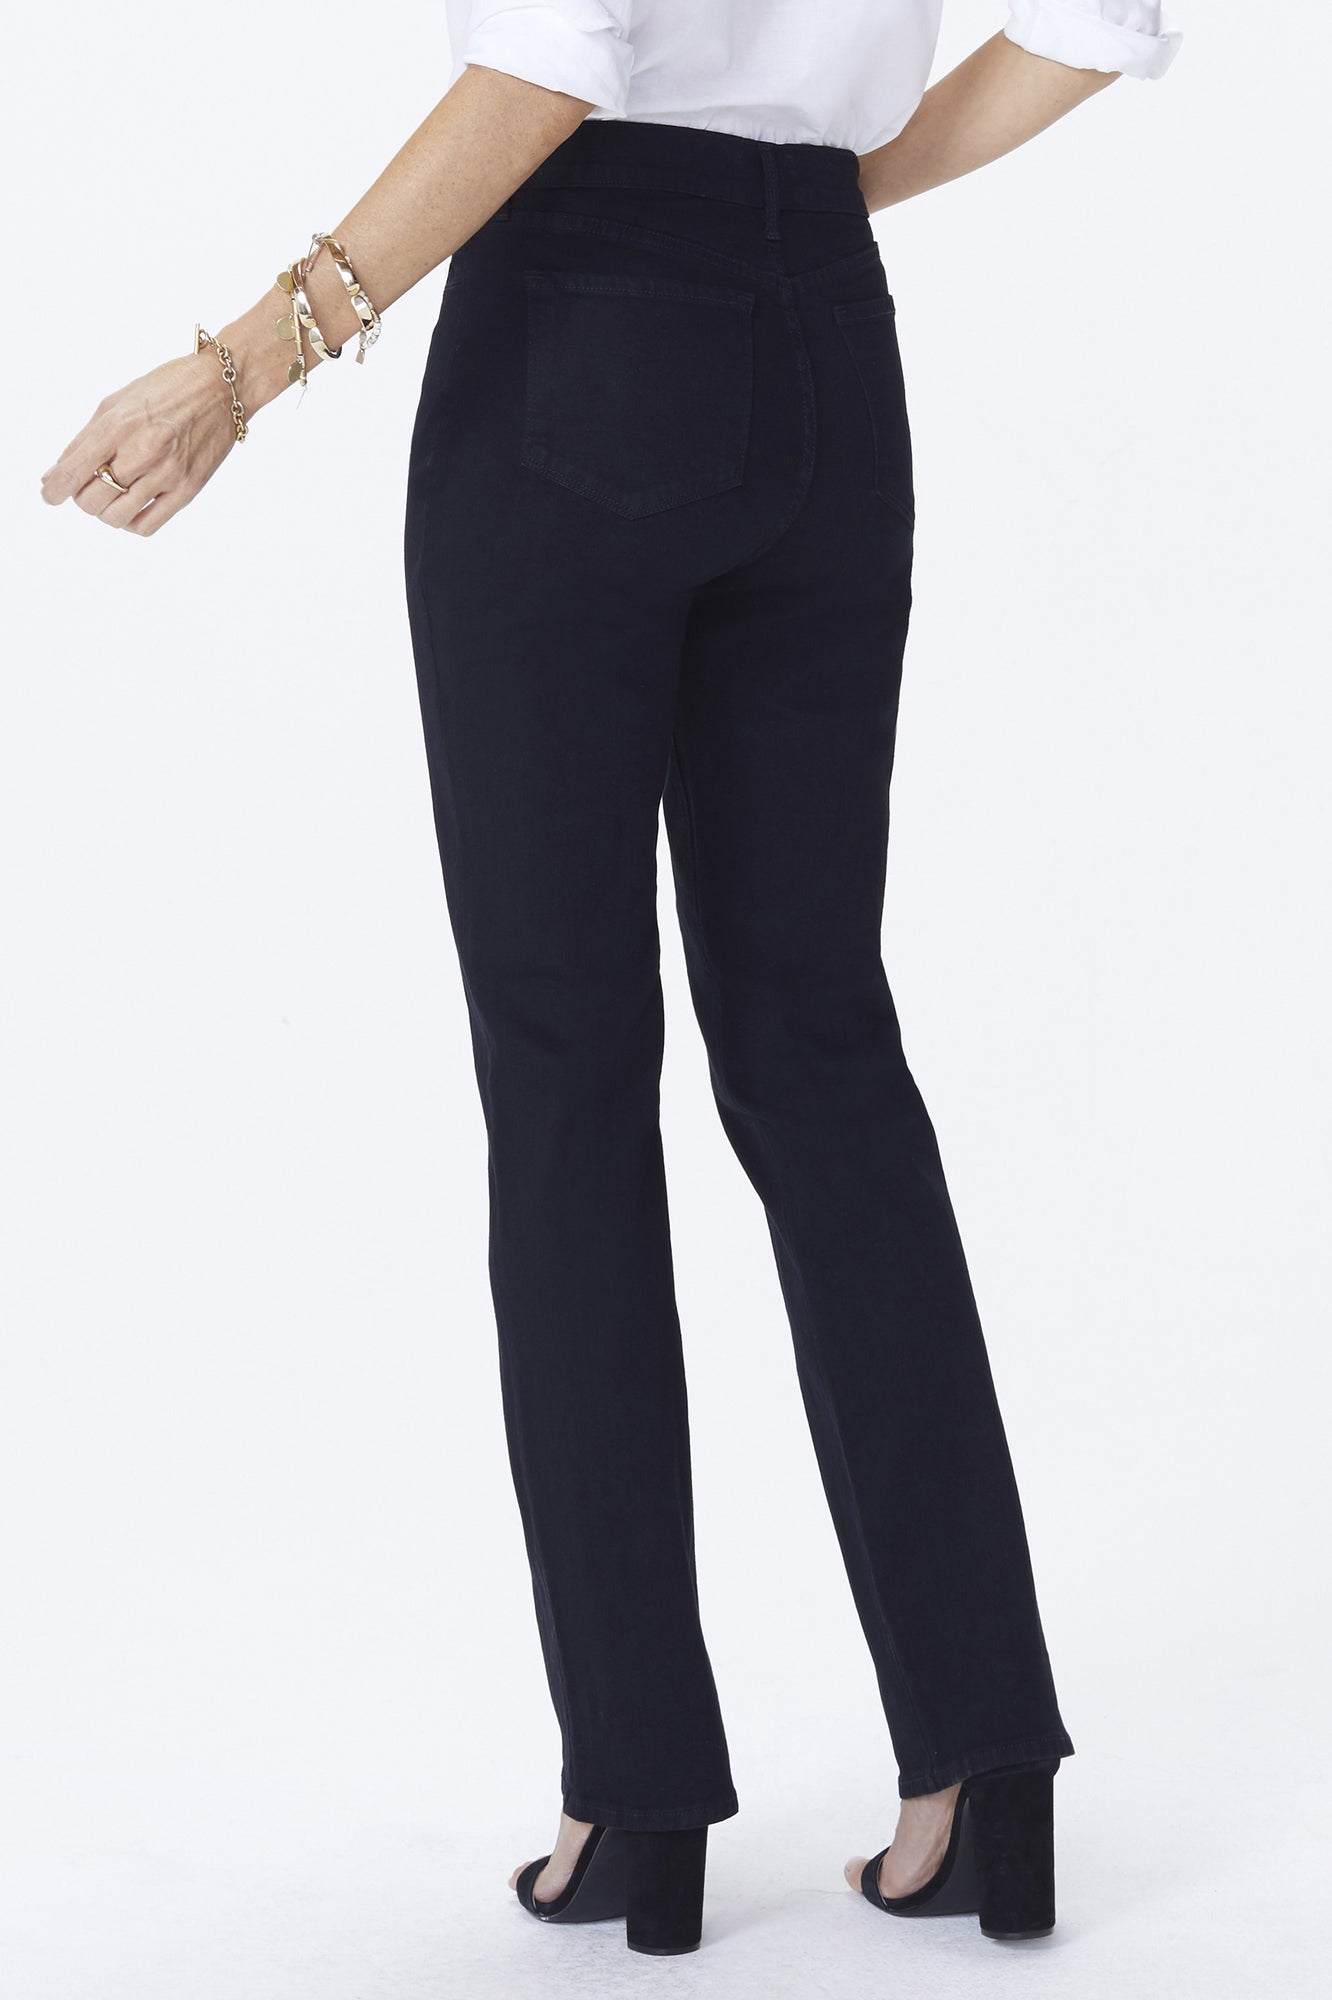 NYDJ Women's Black Hi-Rise Tummy Tuck Straight Leg Jeans Size 8P - $35 -  From Jessica